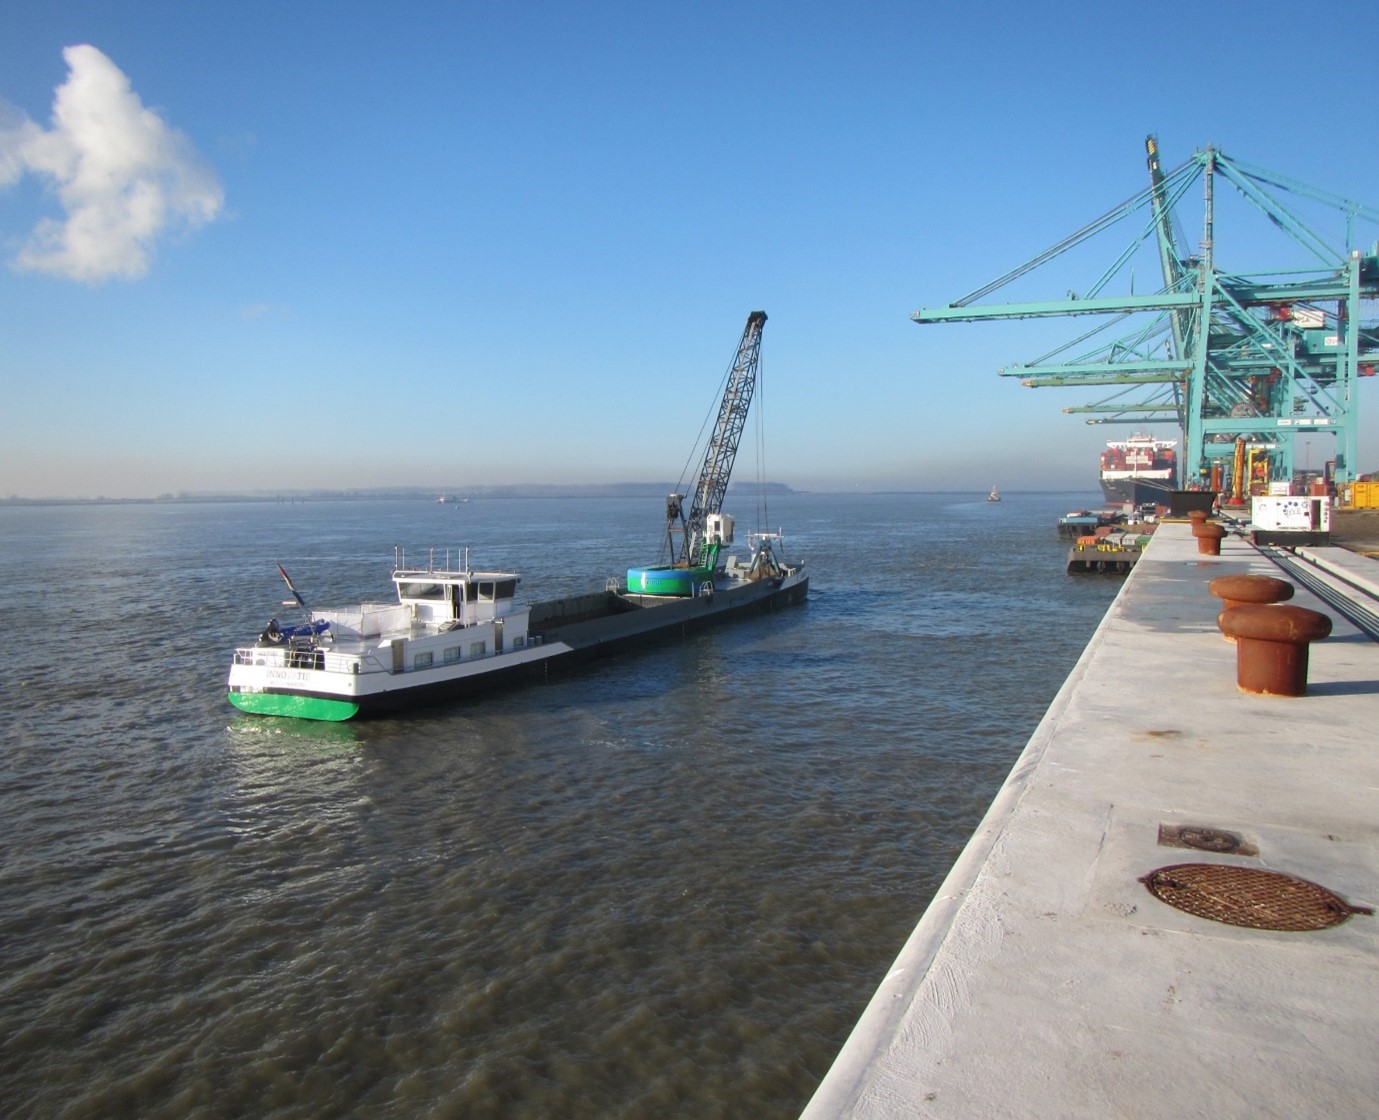 Infrastructure dredging works at the Noordzee terminal (Port of Antwerp – Westerschelde) to guarantee sufficient draft.